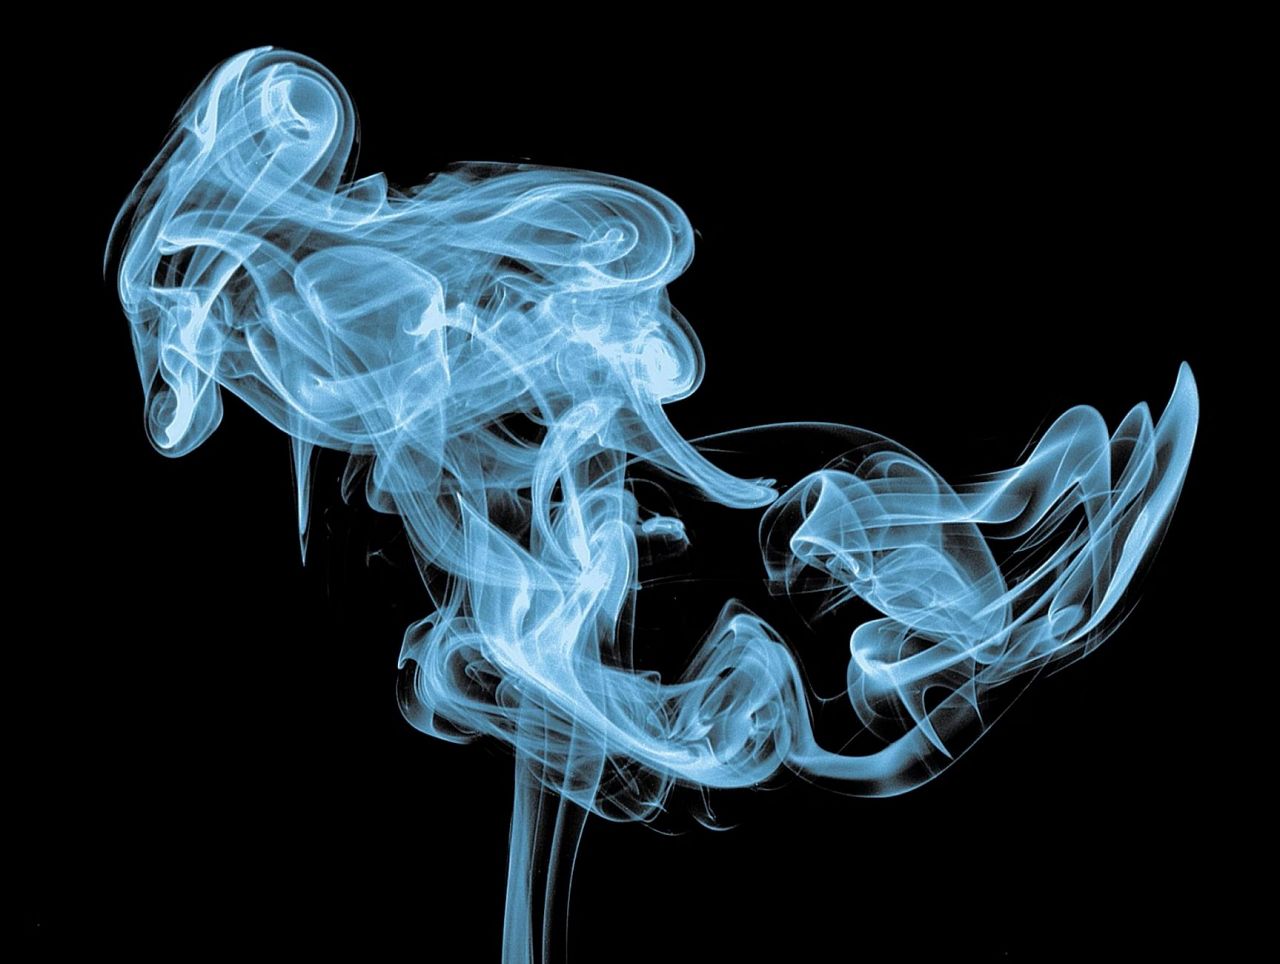 Illegale tabak gevonden in bovenwoning horecabedrijf